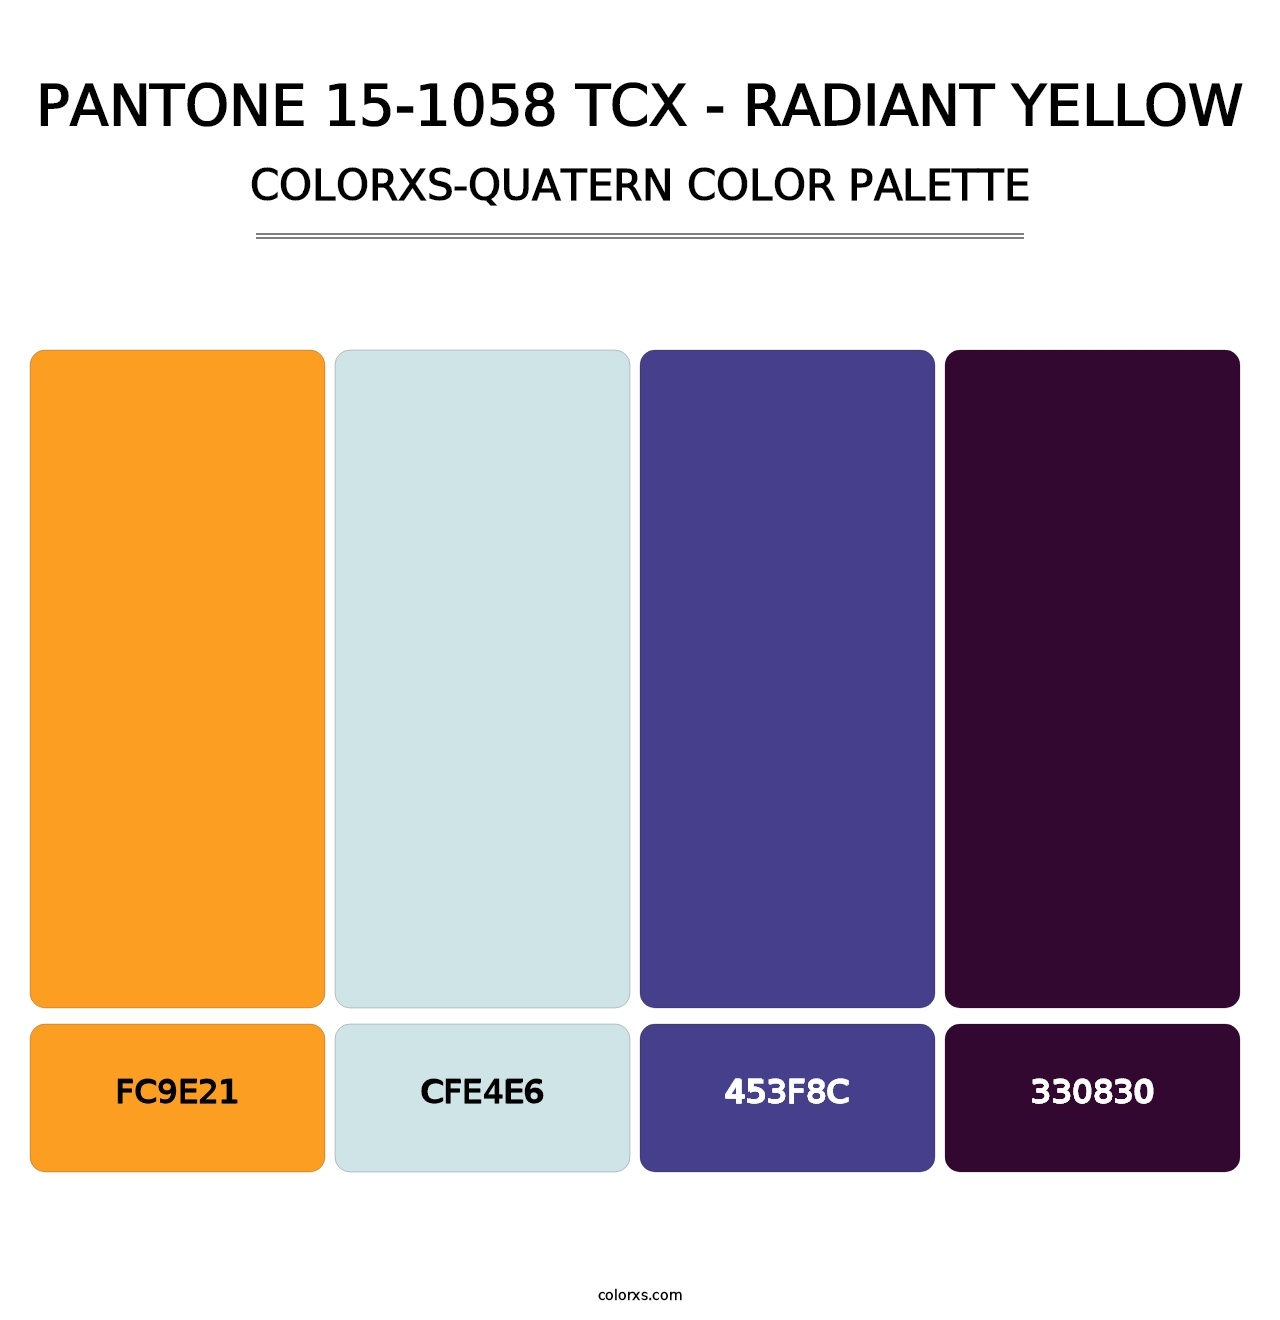 PANTONE 15-1058 TCX - Radiant Yellow - Colorxs Quatern Palette